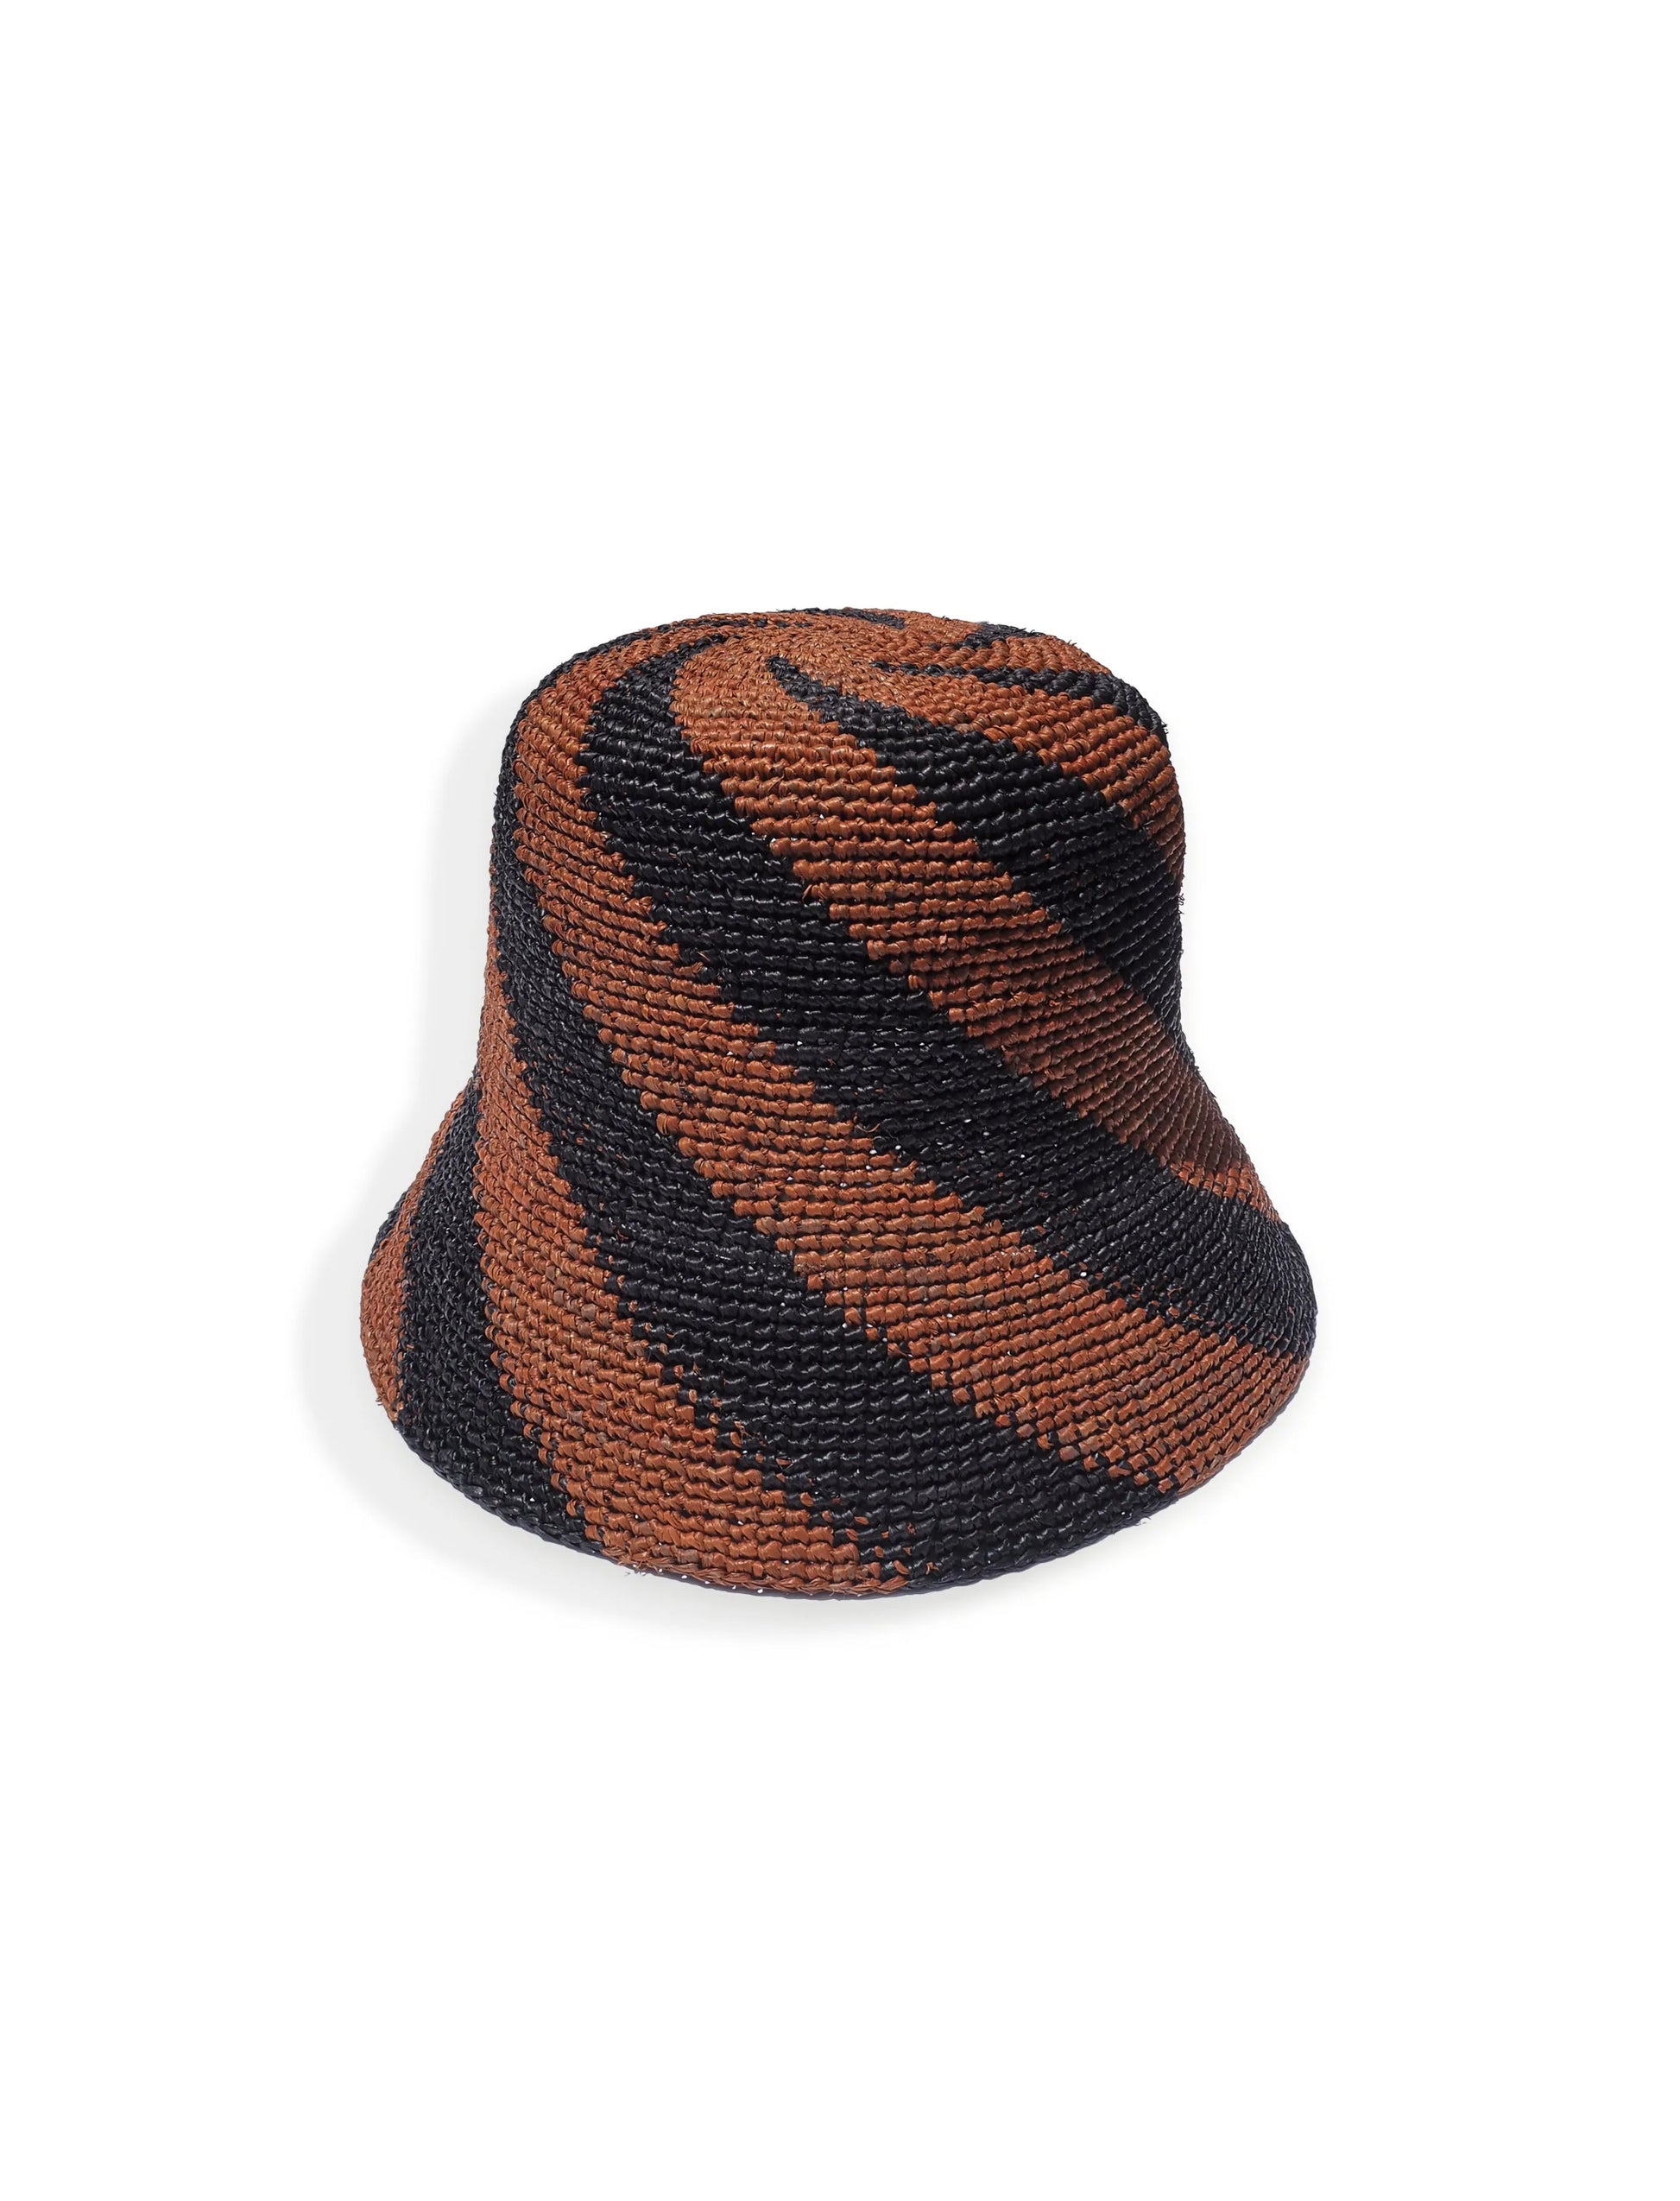 Jace Banu - Coffee & Black Spiral Cyla Bucket Hat